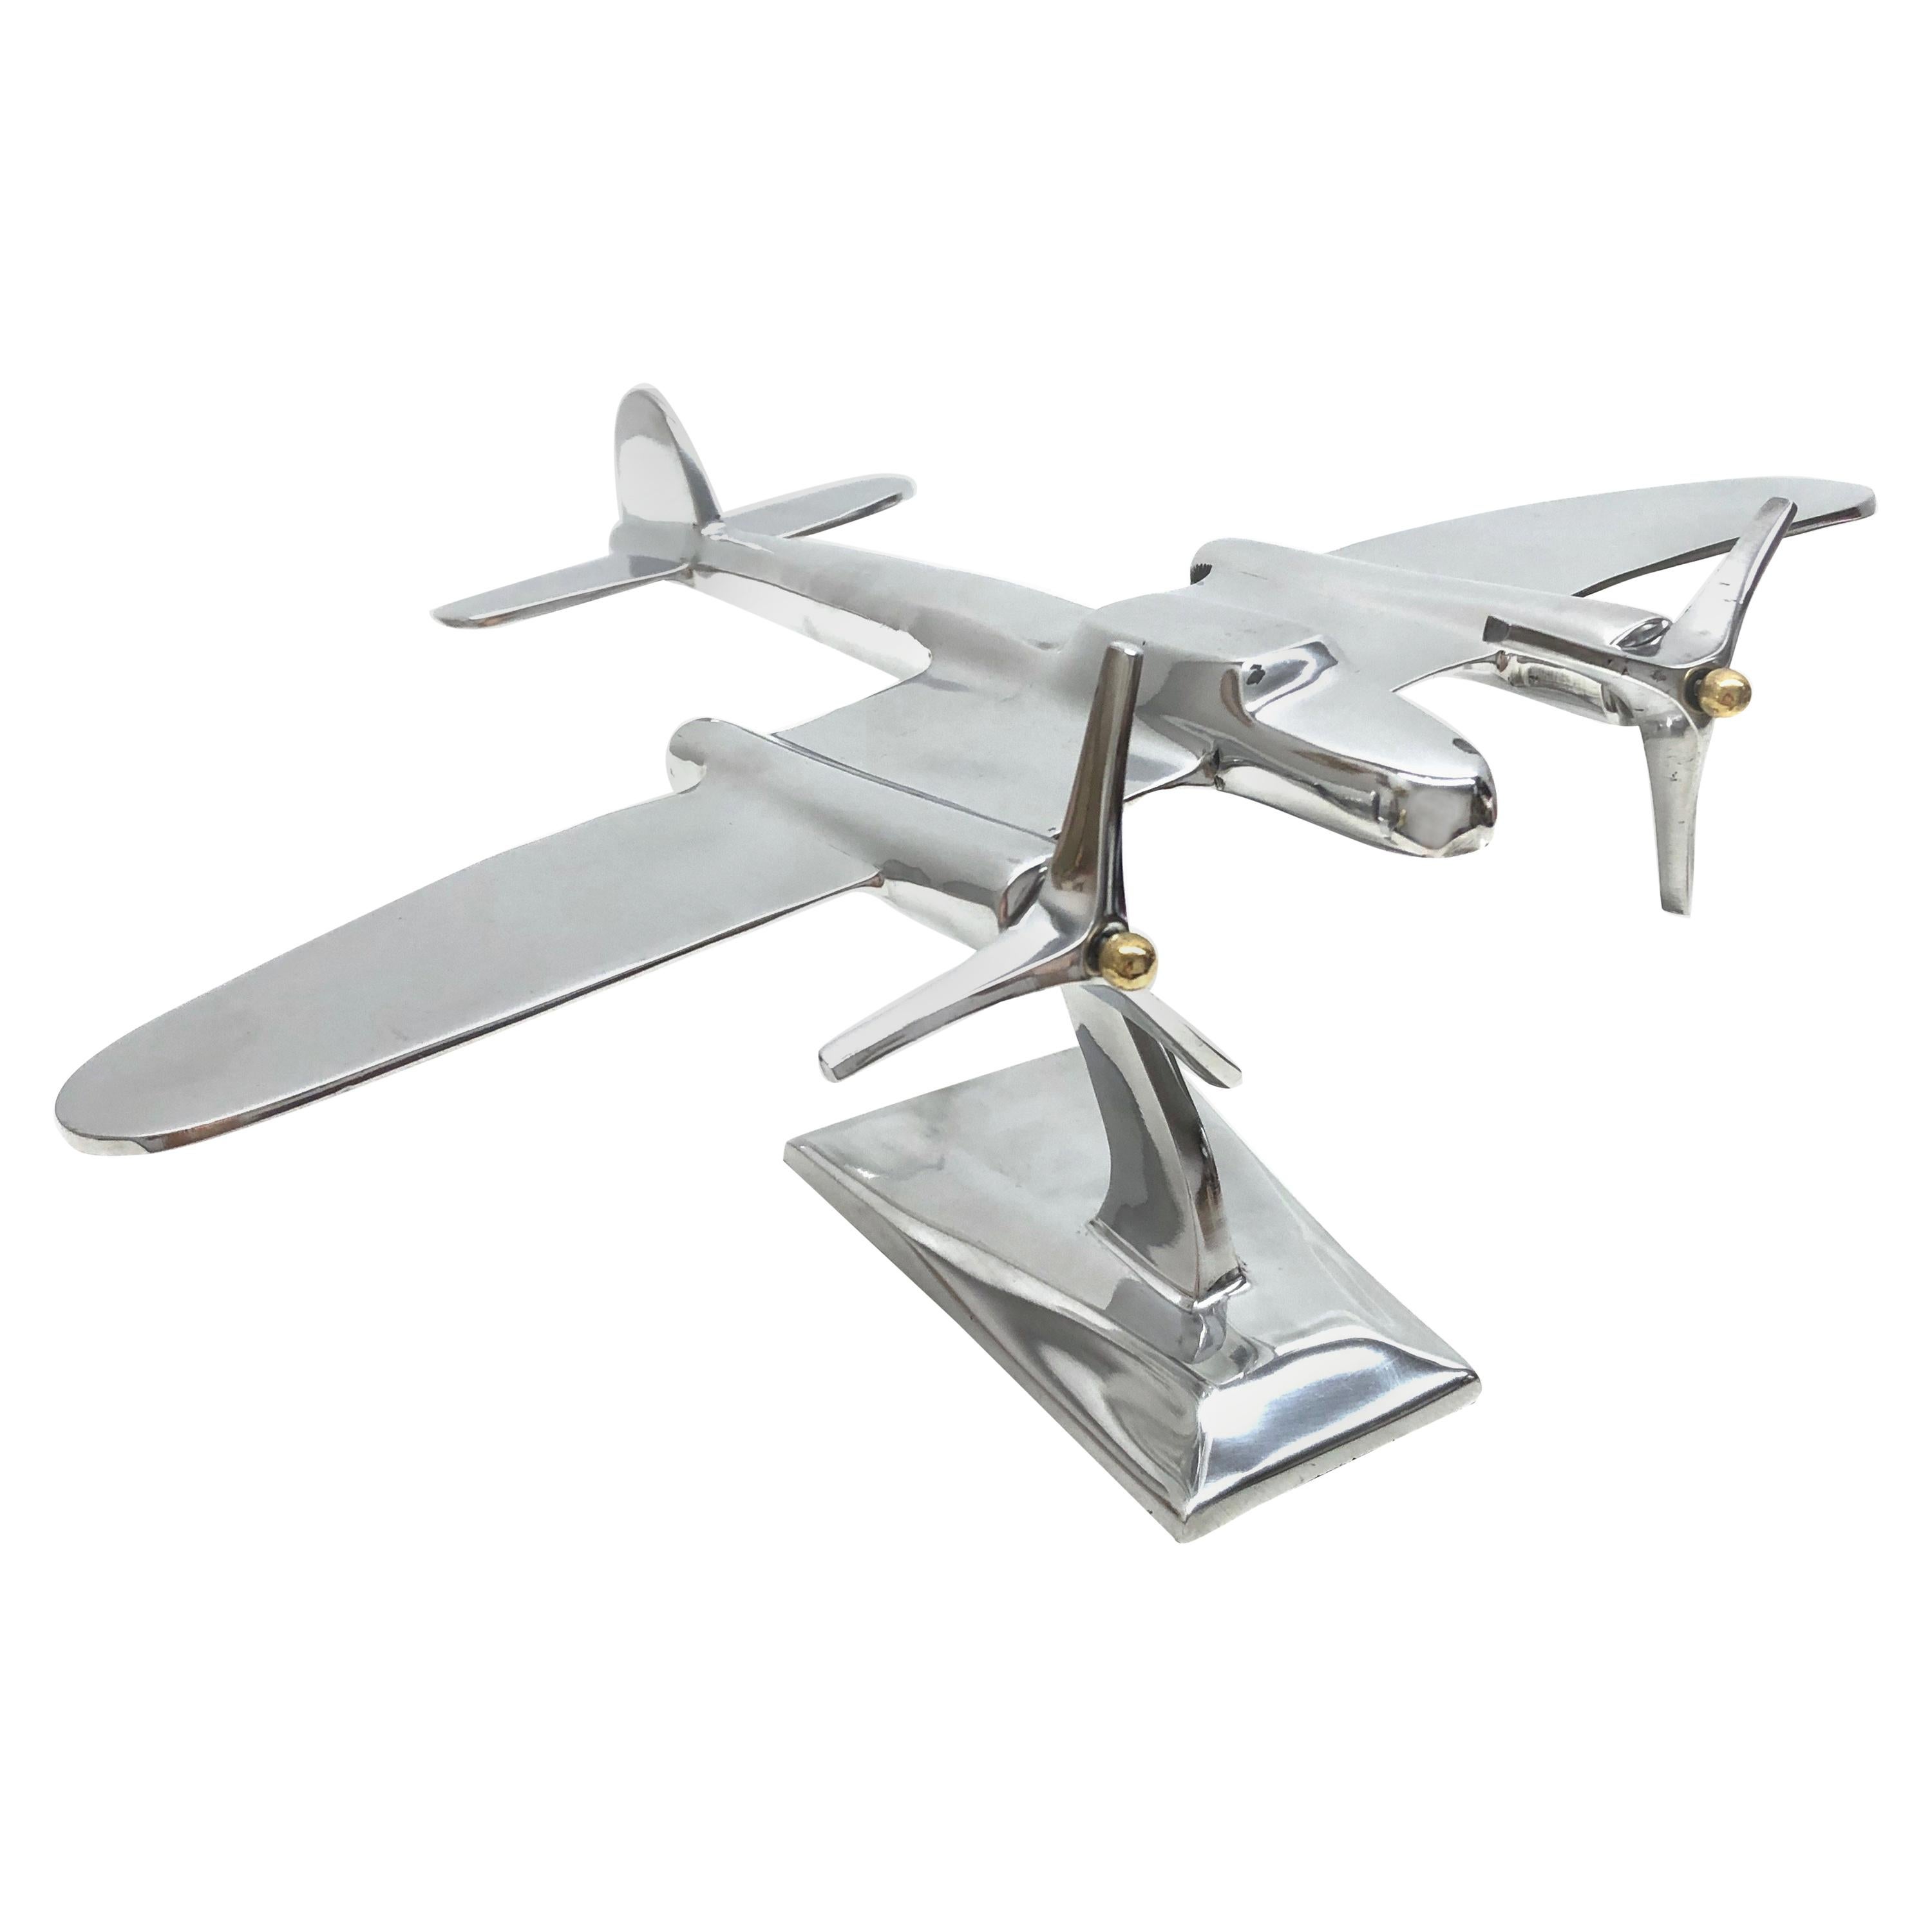 Industrial Vintage Metal Aircraft Plane Model Desk Item Statue, circa 1980s